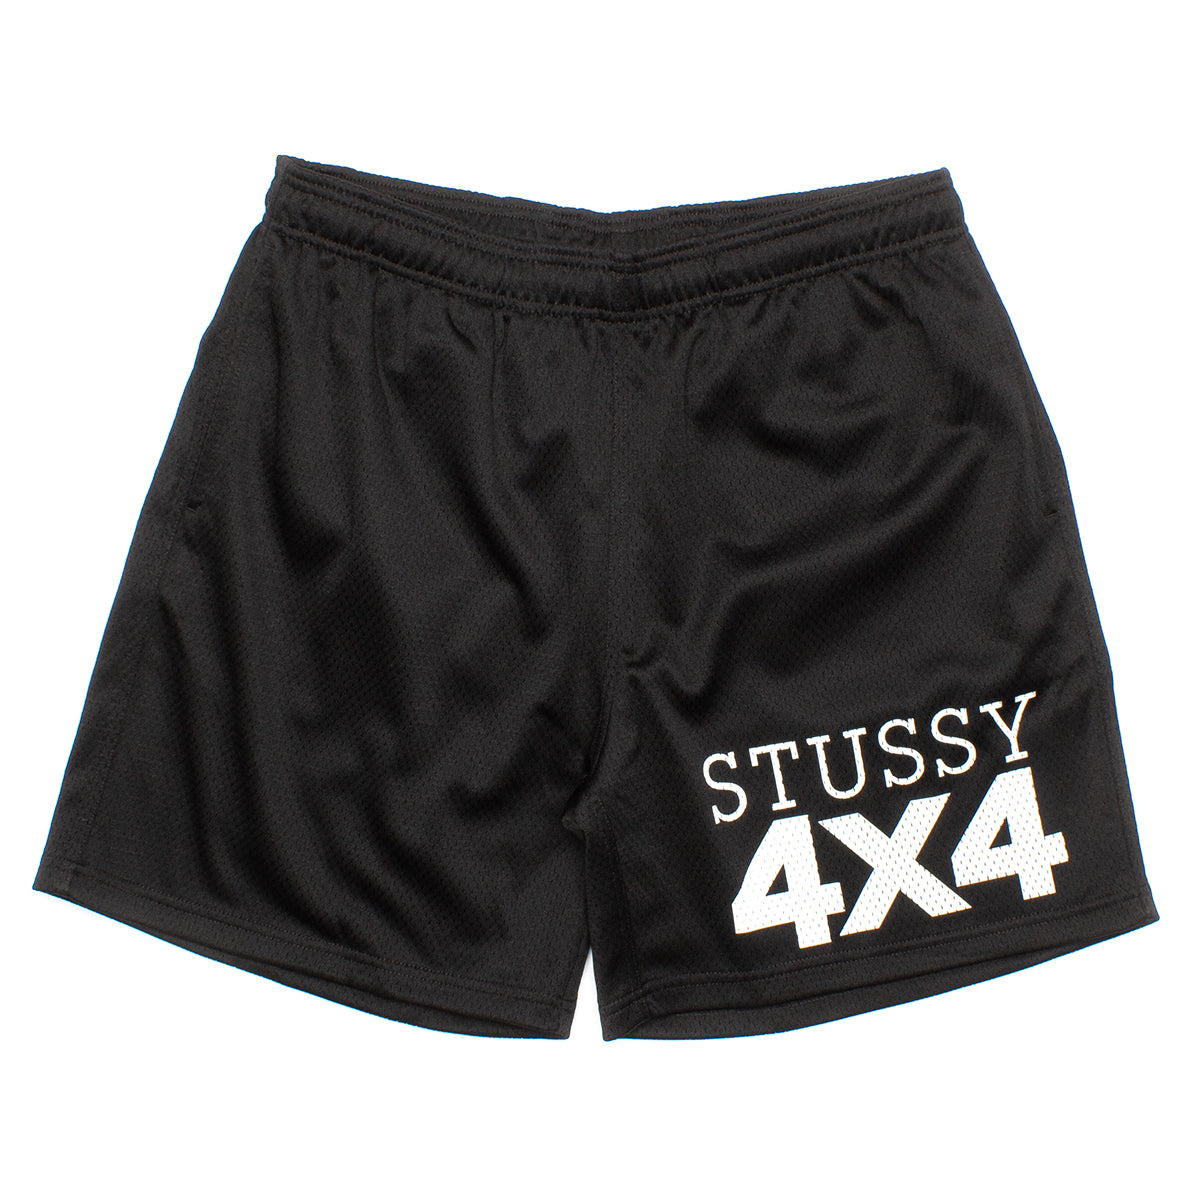 Stussy | 4x4 Mesh Short Style # 112293 Color : Black